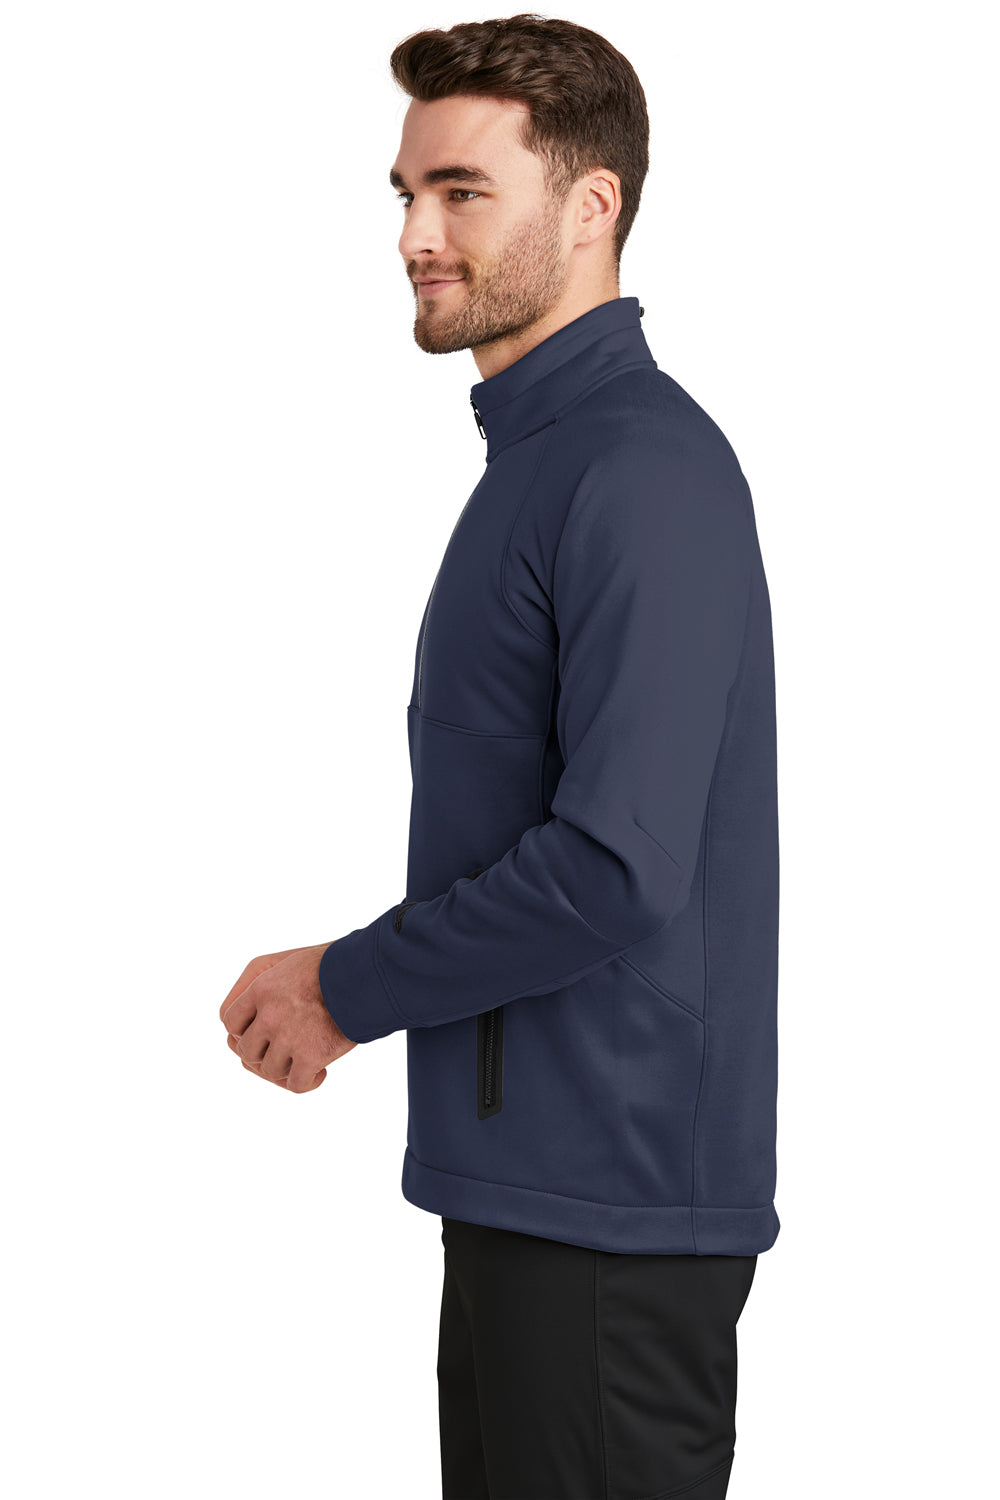 New Era NEA523 Mens Venue Moisture Wicking Fleece 1/4 Zip Sweatshirt Navy Blue Side